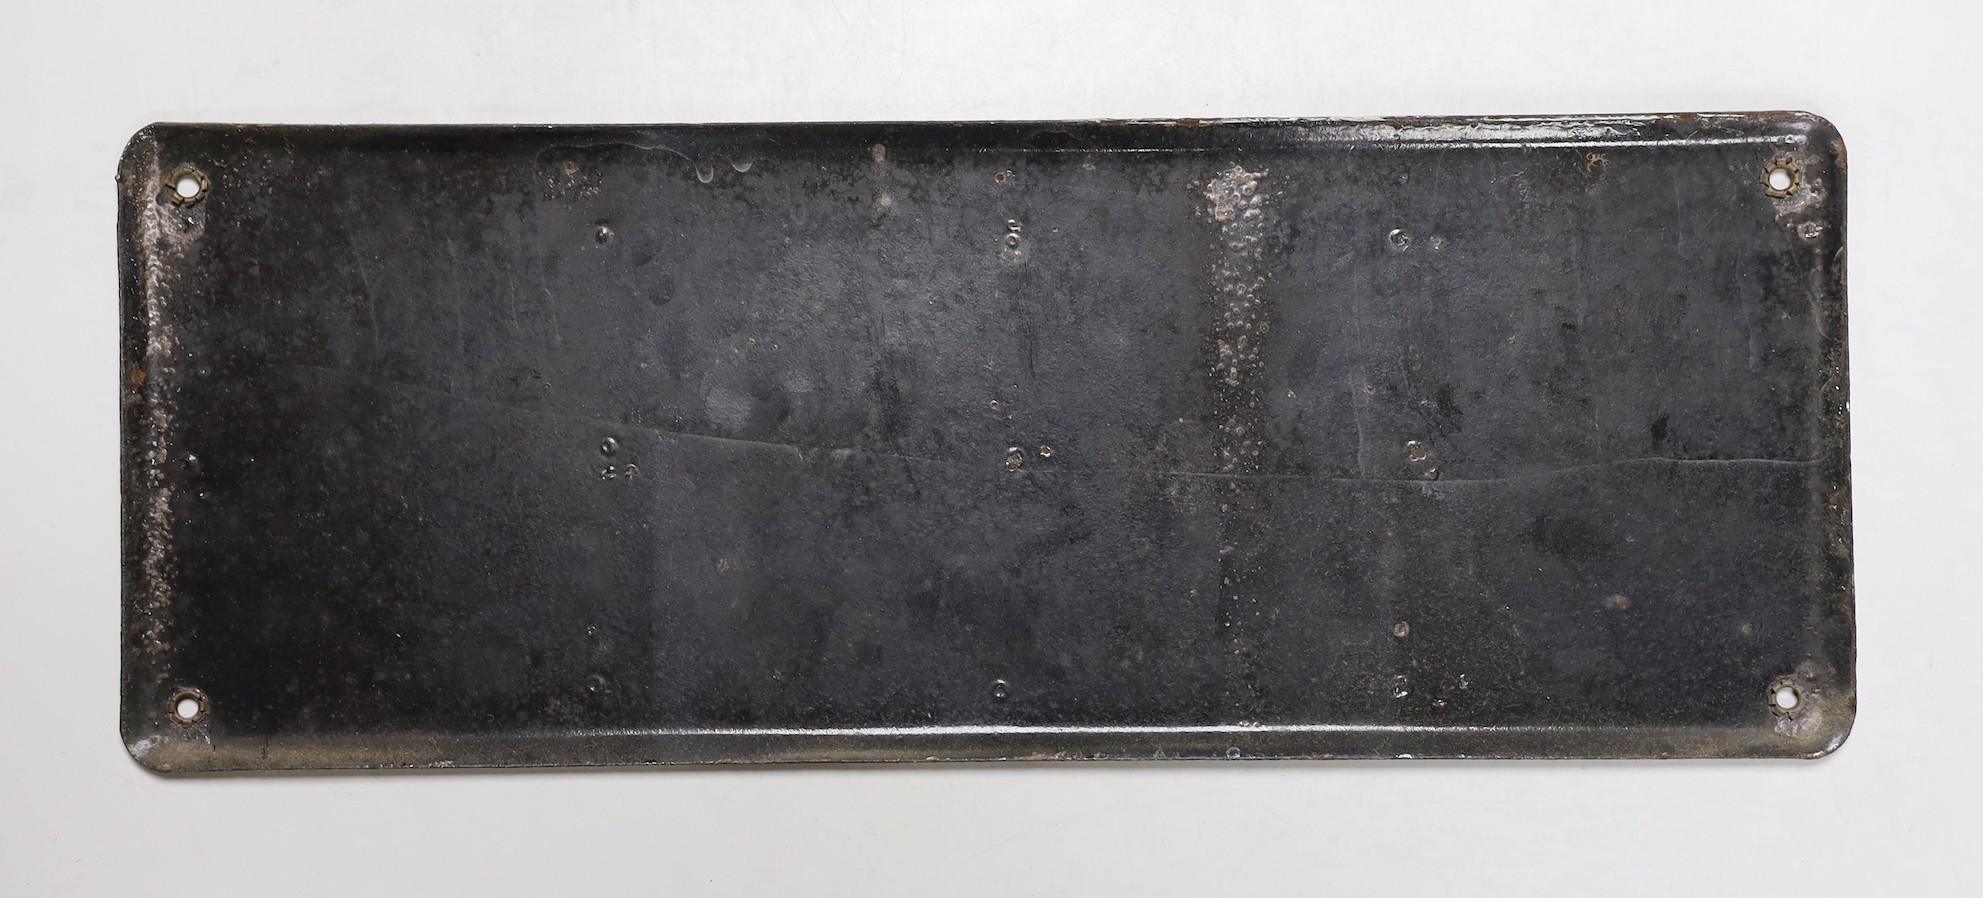 A rectangular polychromatic enamel sign for Chicoree Williot, 15x40cm